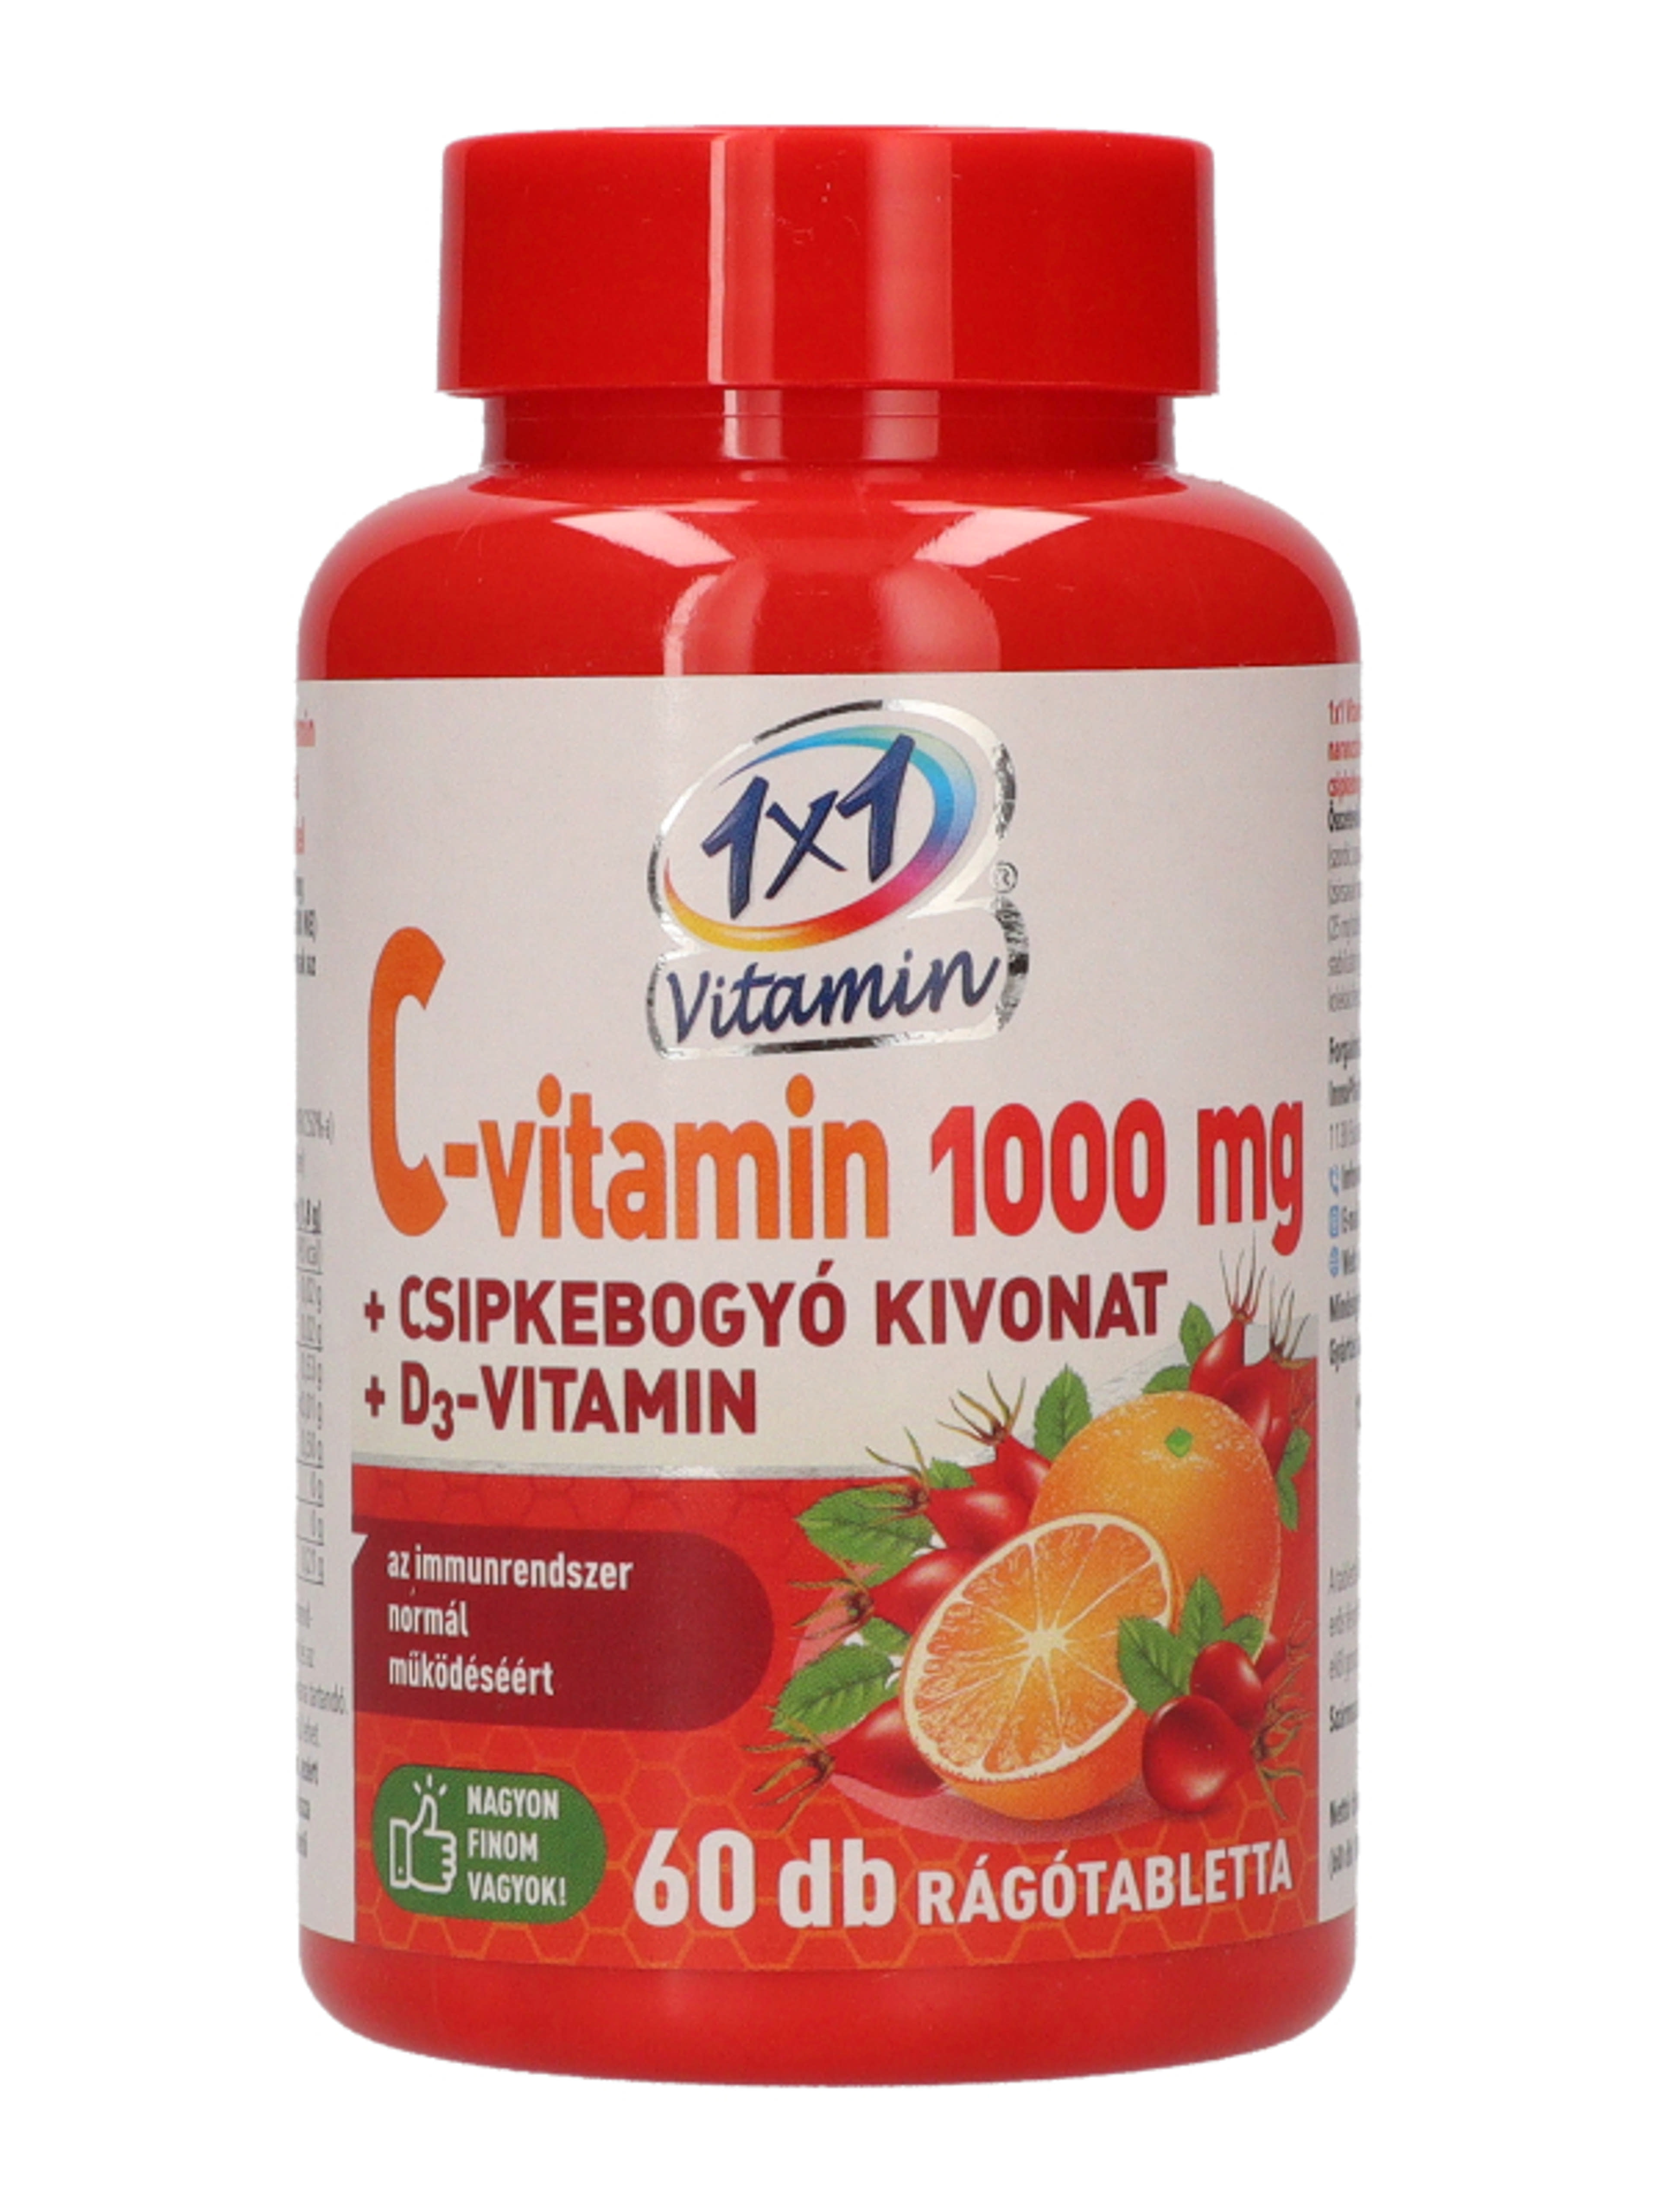 1x1 Vitamin C-Vitamin 1000mg+ D3+ rágótabletta csipkebogyóval - 60 db